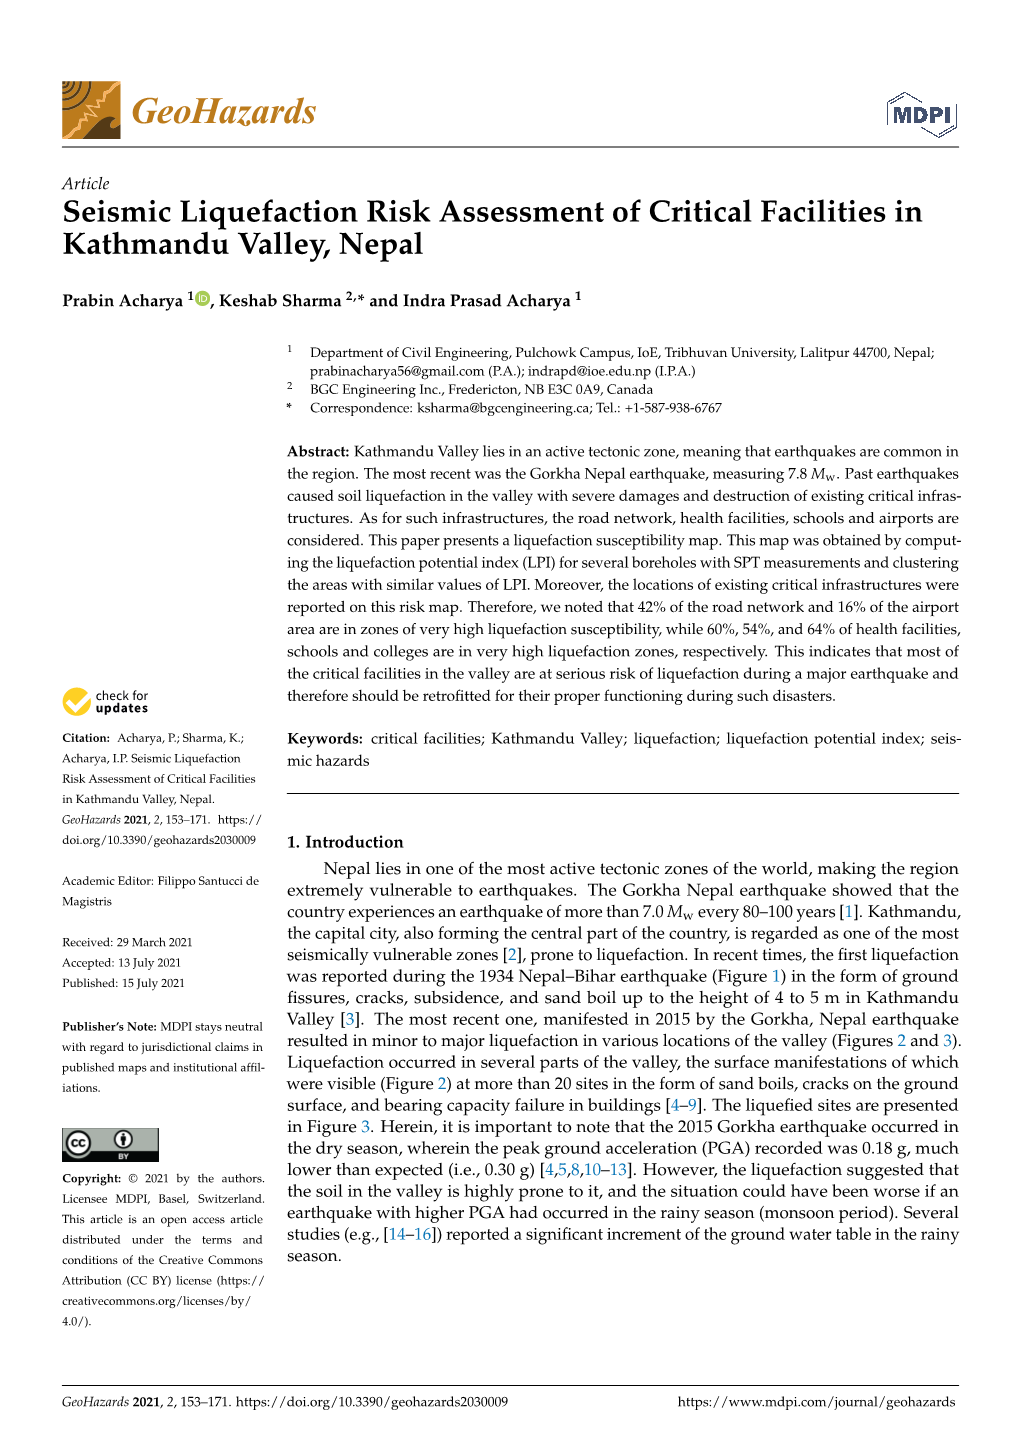 Seismic Liquefaction Risk Assessment of Critical Facilities in Kathmandu Valley, Nepal